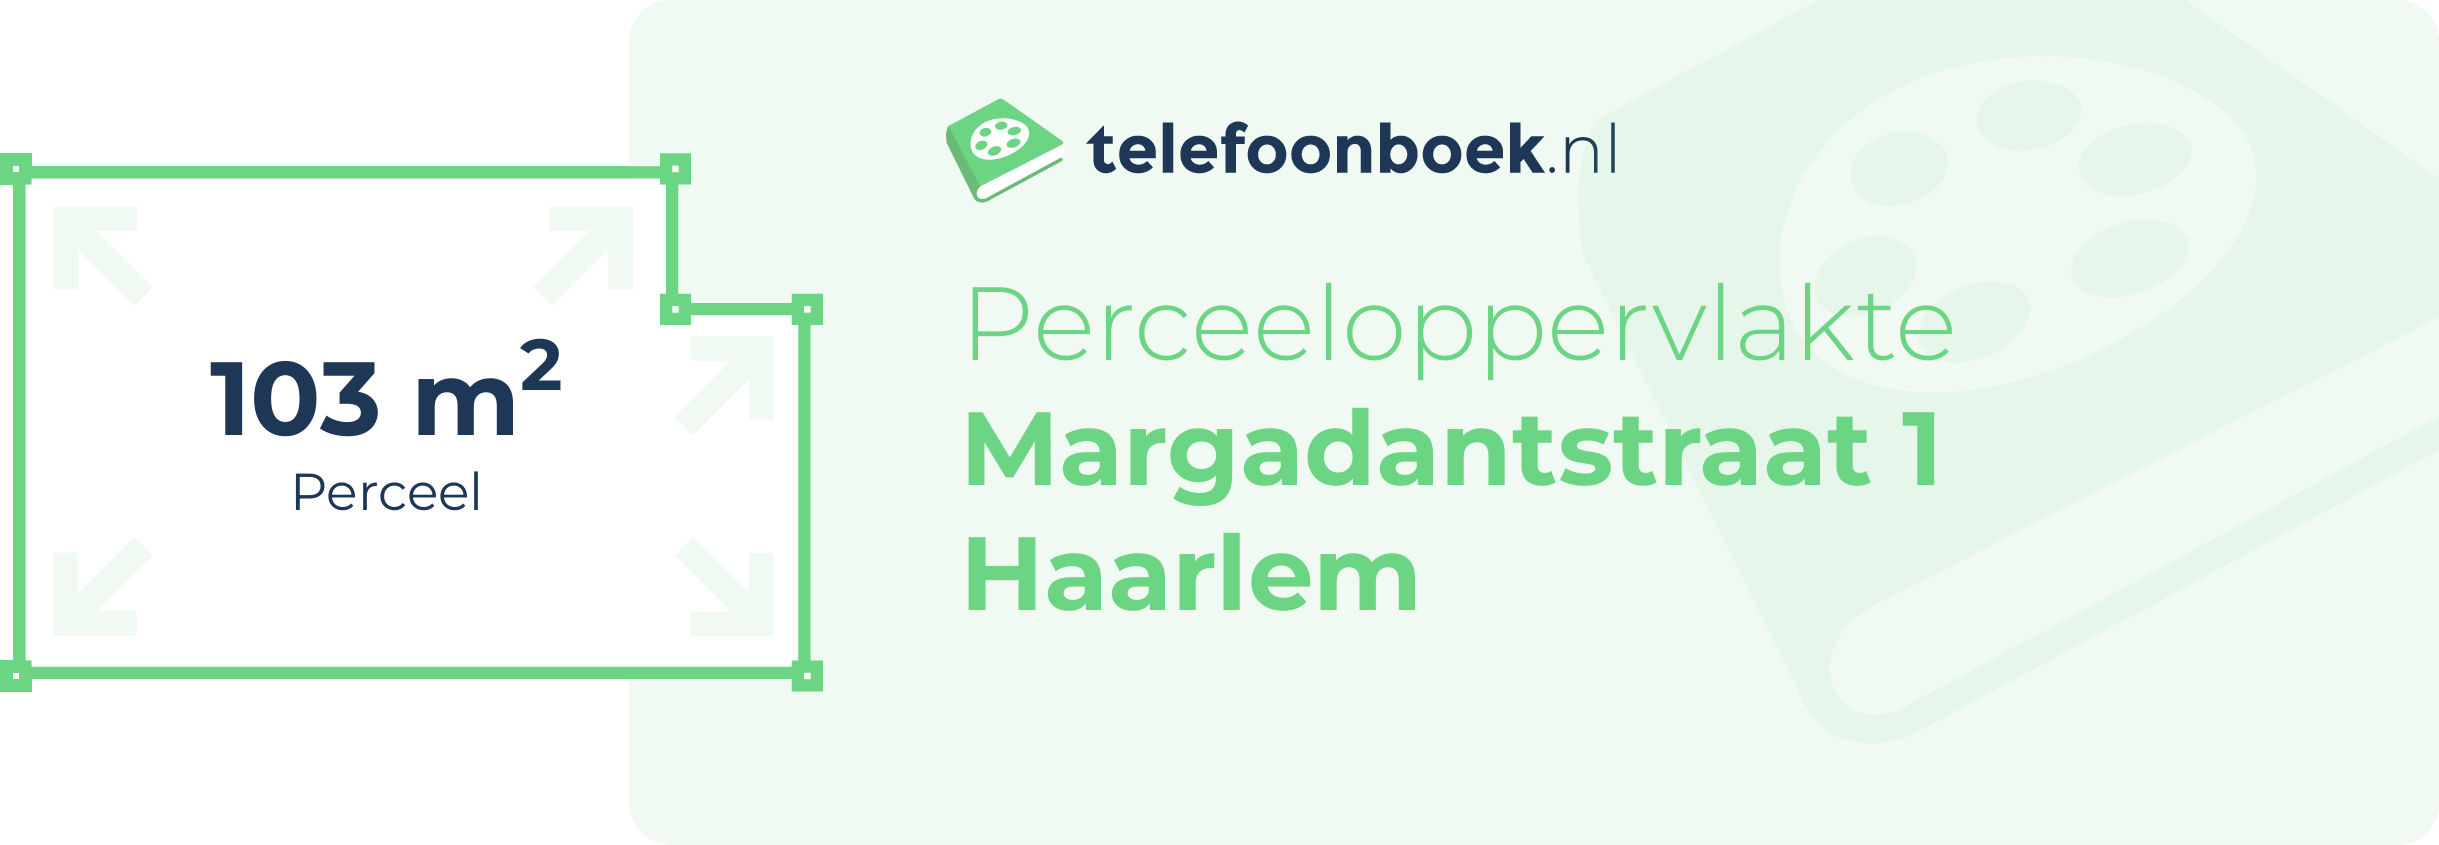 Perceeloppervlakte Margadantstraat 1 Haarlem